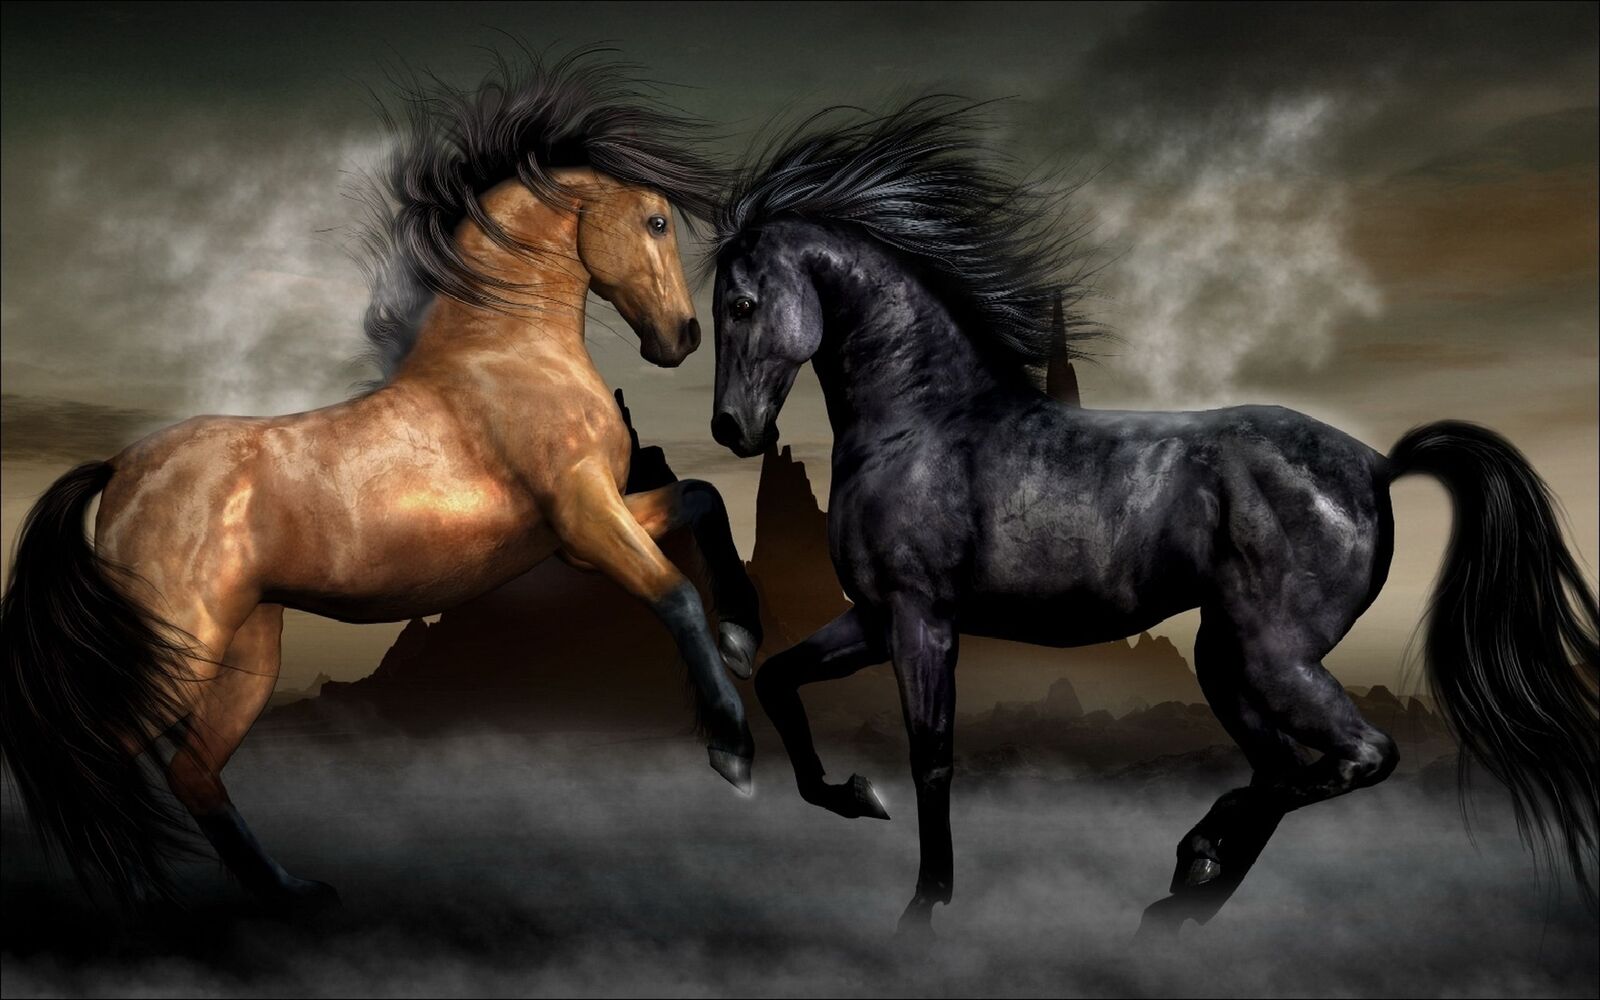 حصان بني وأسود يواجهان بعضهما